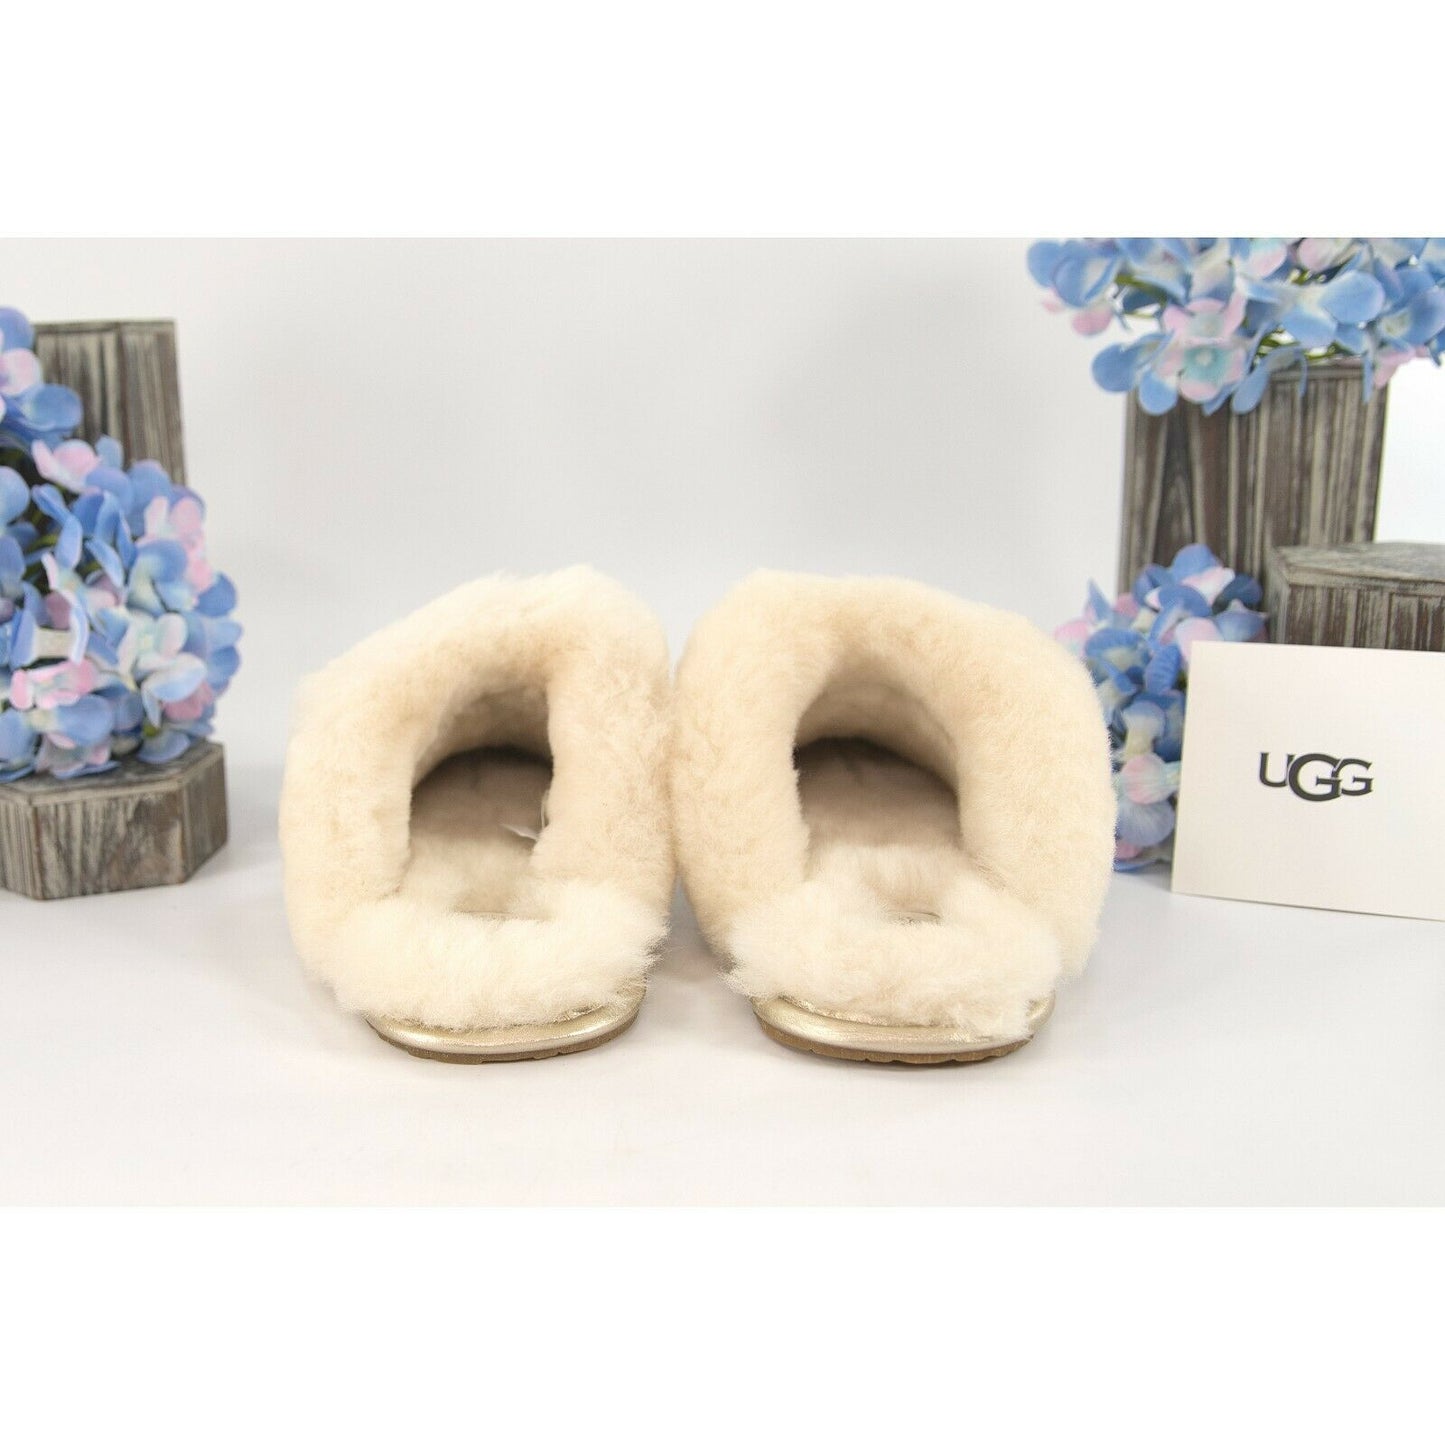 UGG Scuffette Metallic Gold Leather Sheepskin Fur Slippers Slides Size 7 NIB